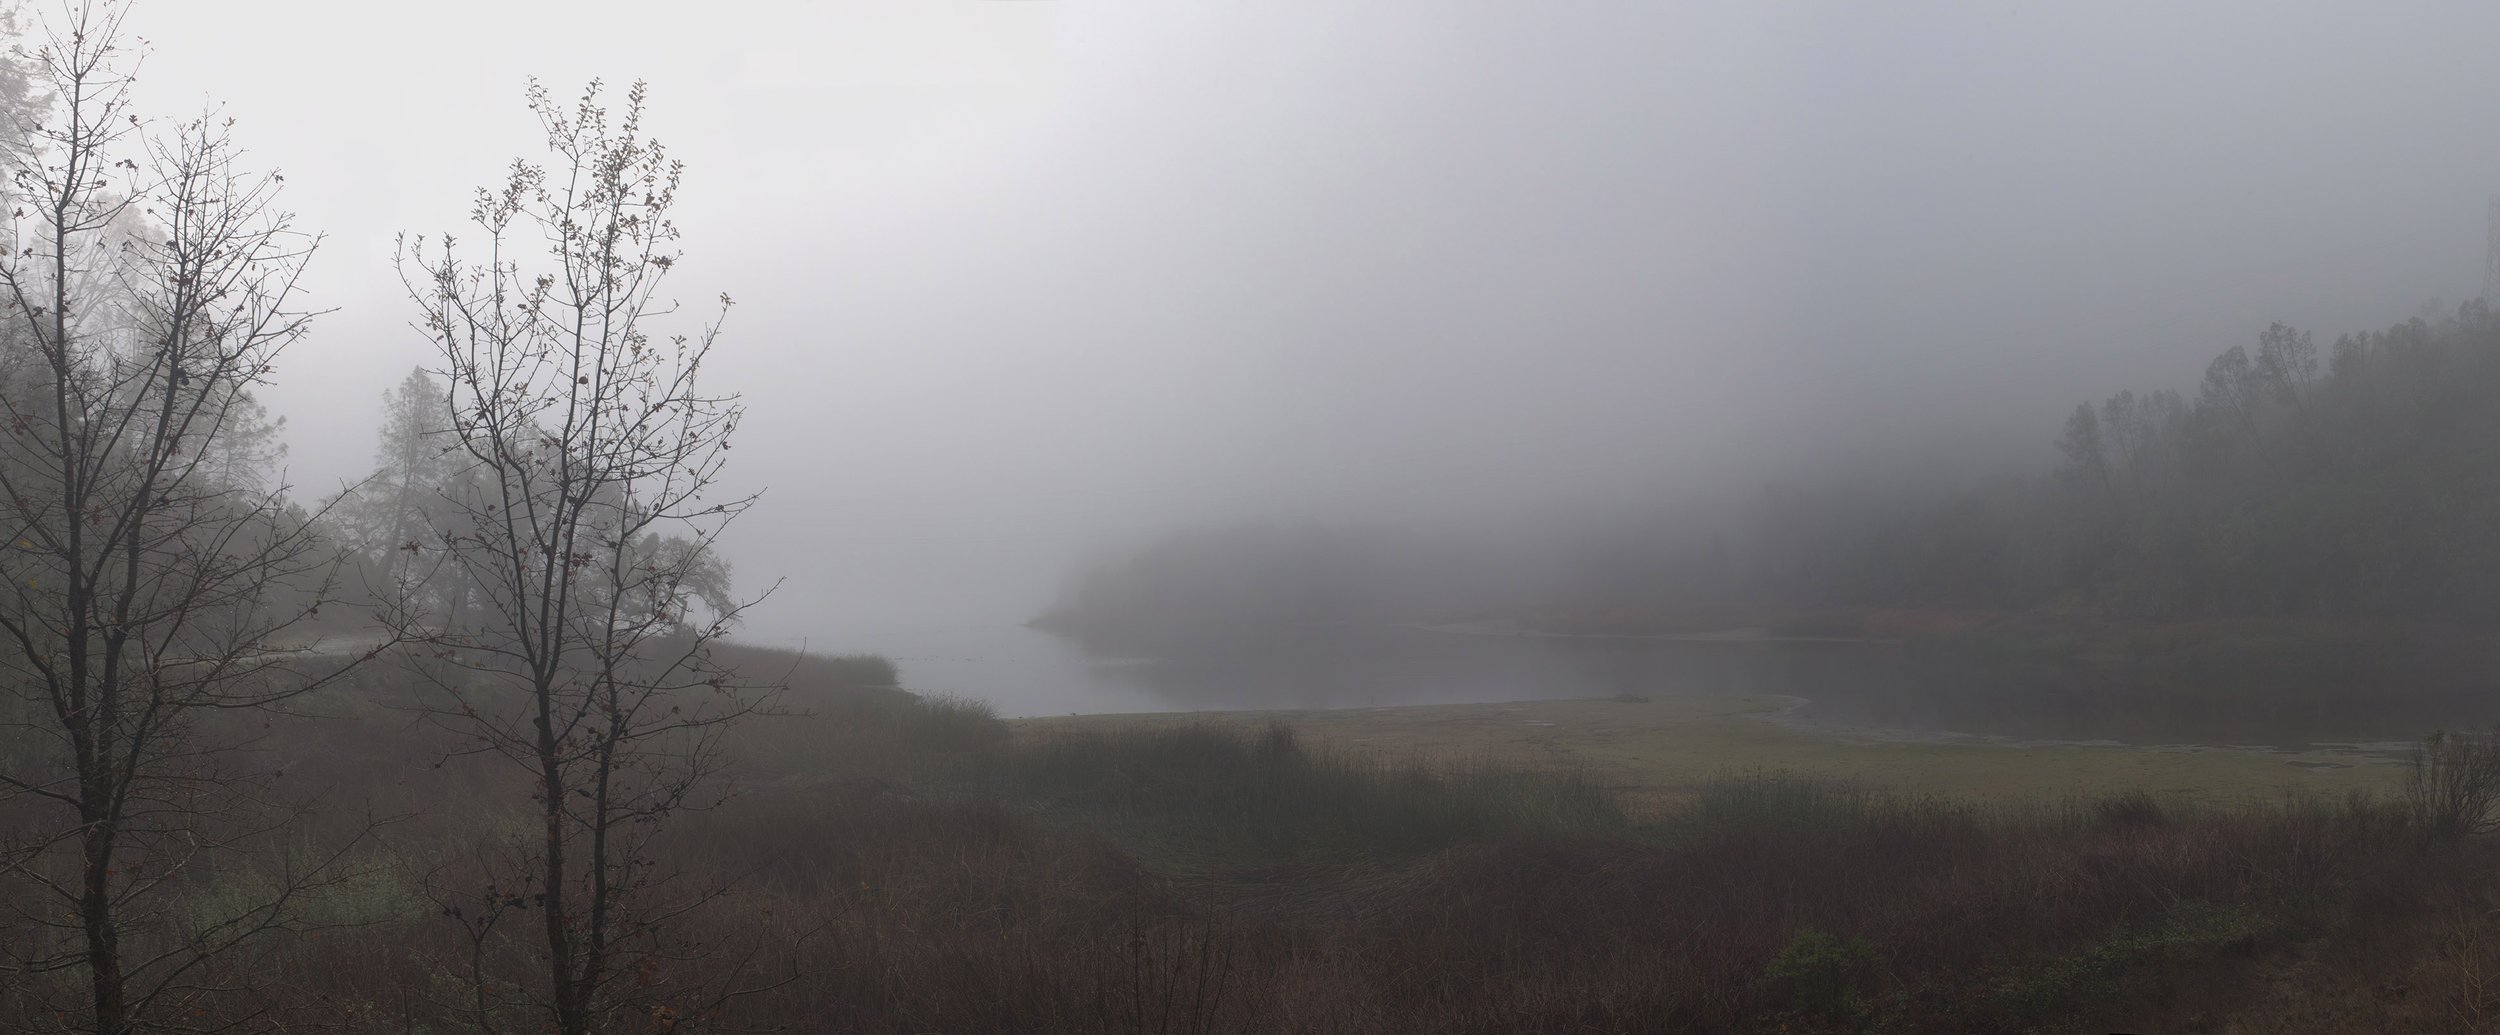 Moore Creek Morning Fog, December 2018